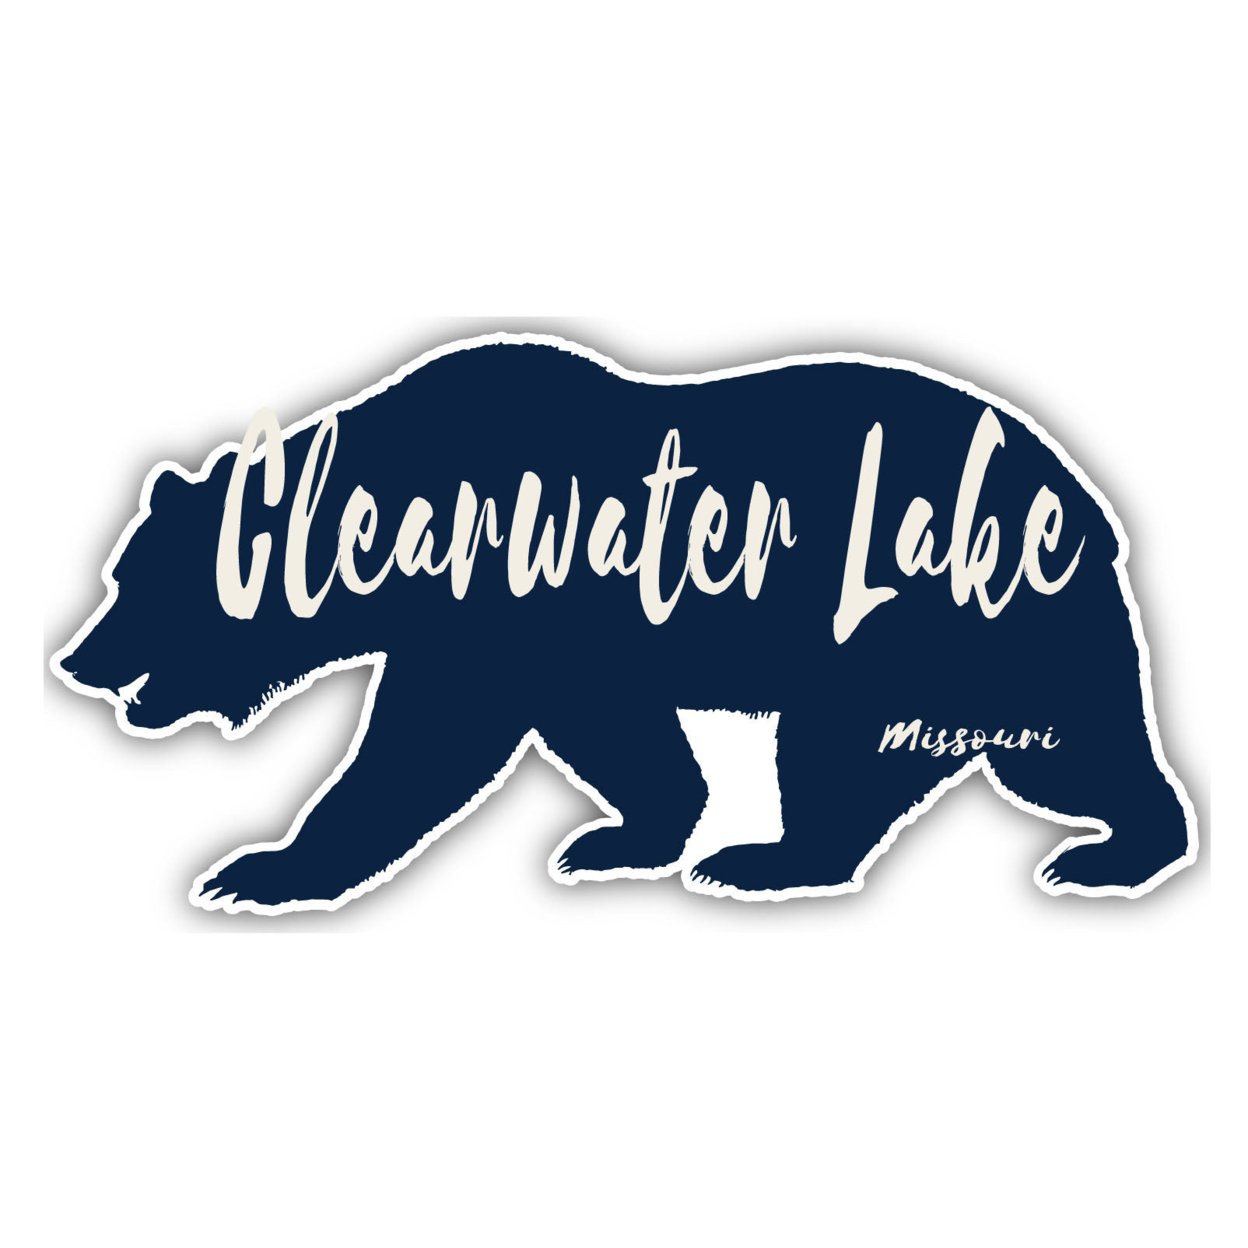 Clearwater Lake Missouri Souvenir Decorative Stickers (Choose Theme And Size) - Single Unit, 6-Inch, Bear